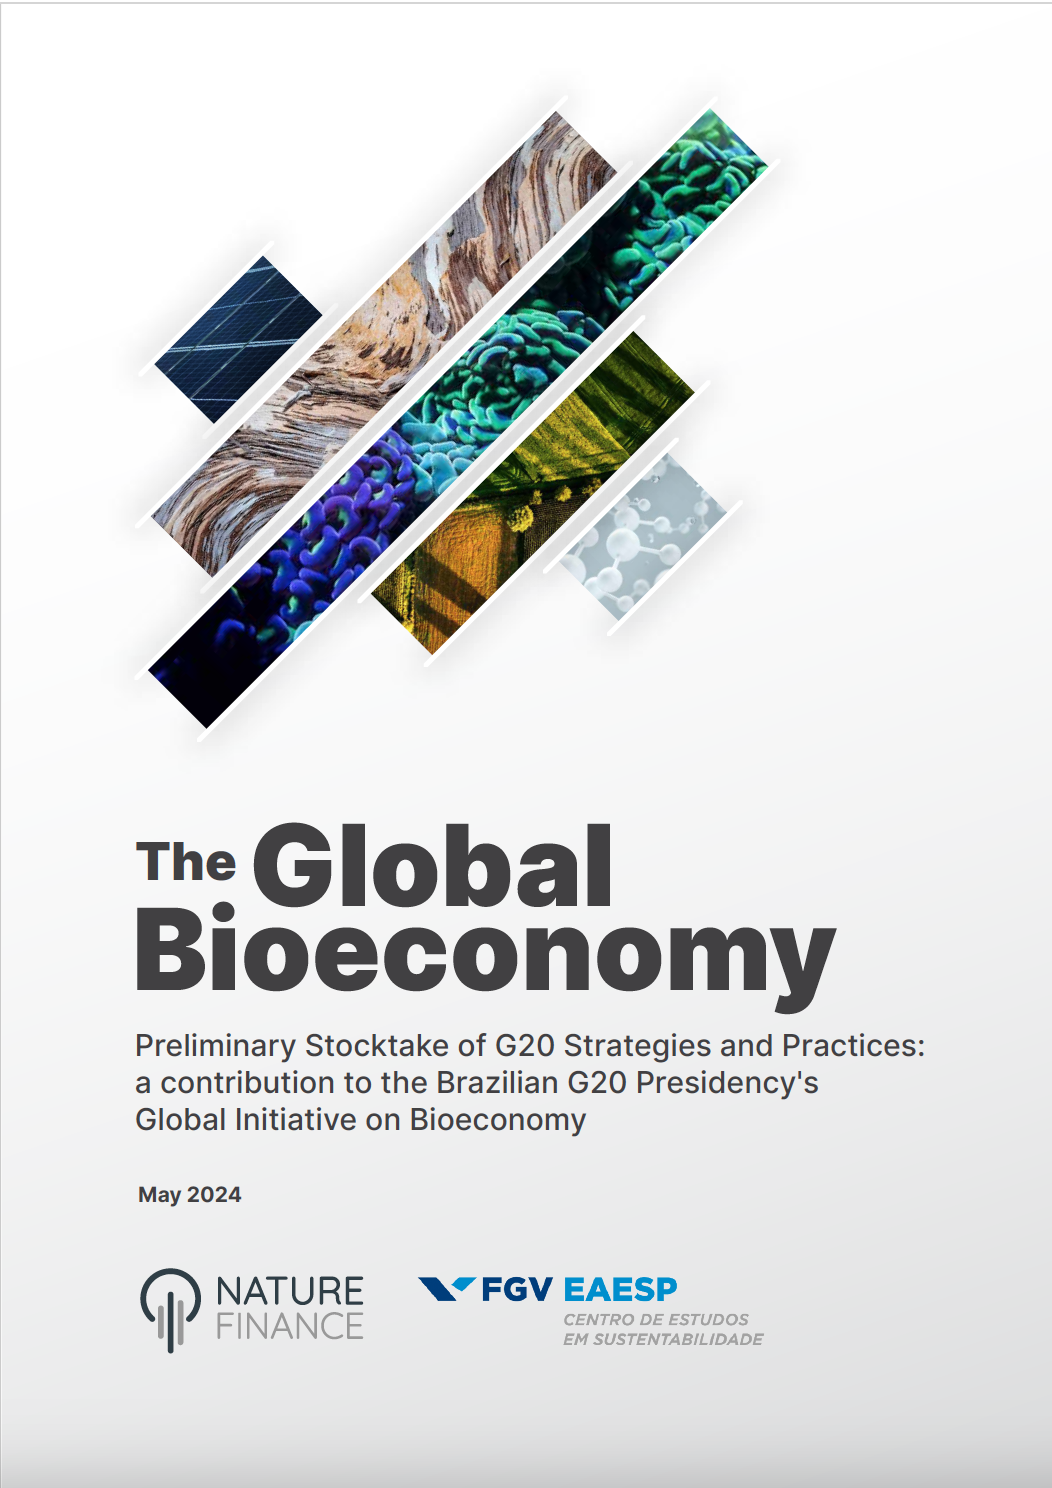 The Global Bioeconomy